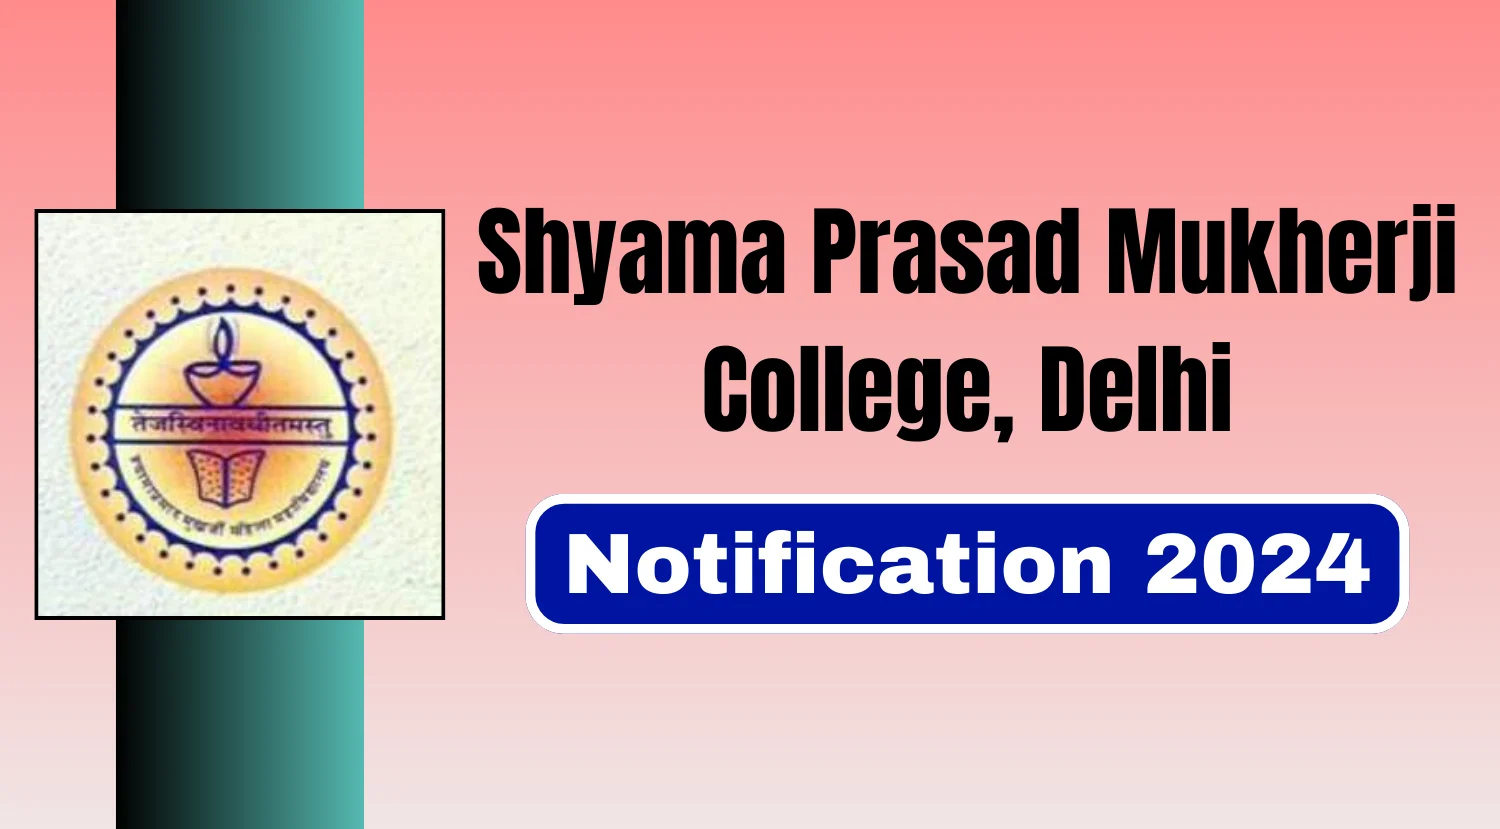 Shyama Prasad Mukherji College Non-Teaching Vacancies Notification 2024 Out